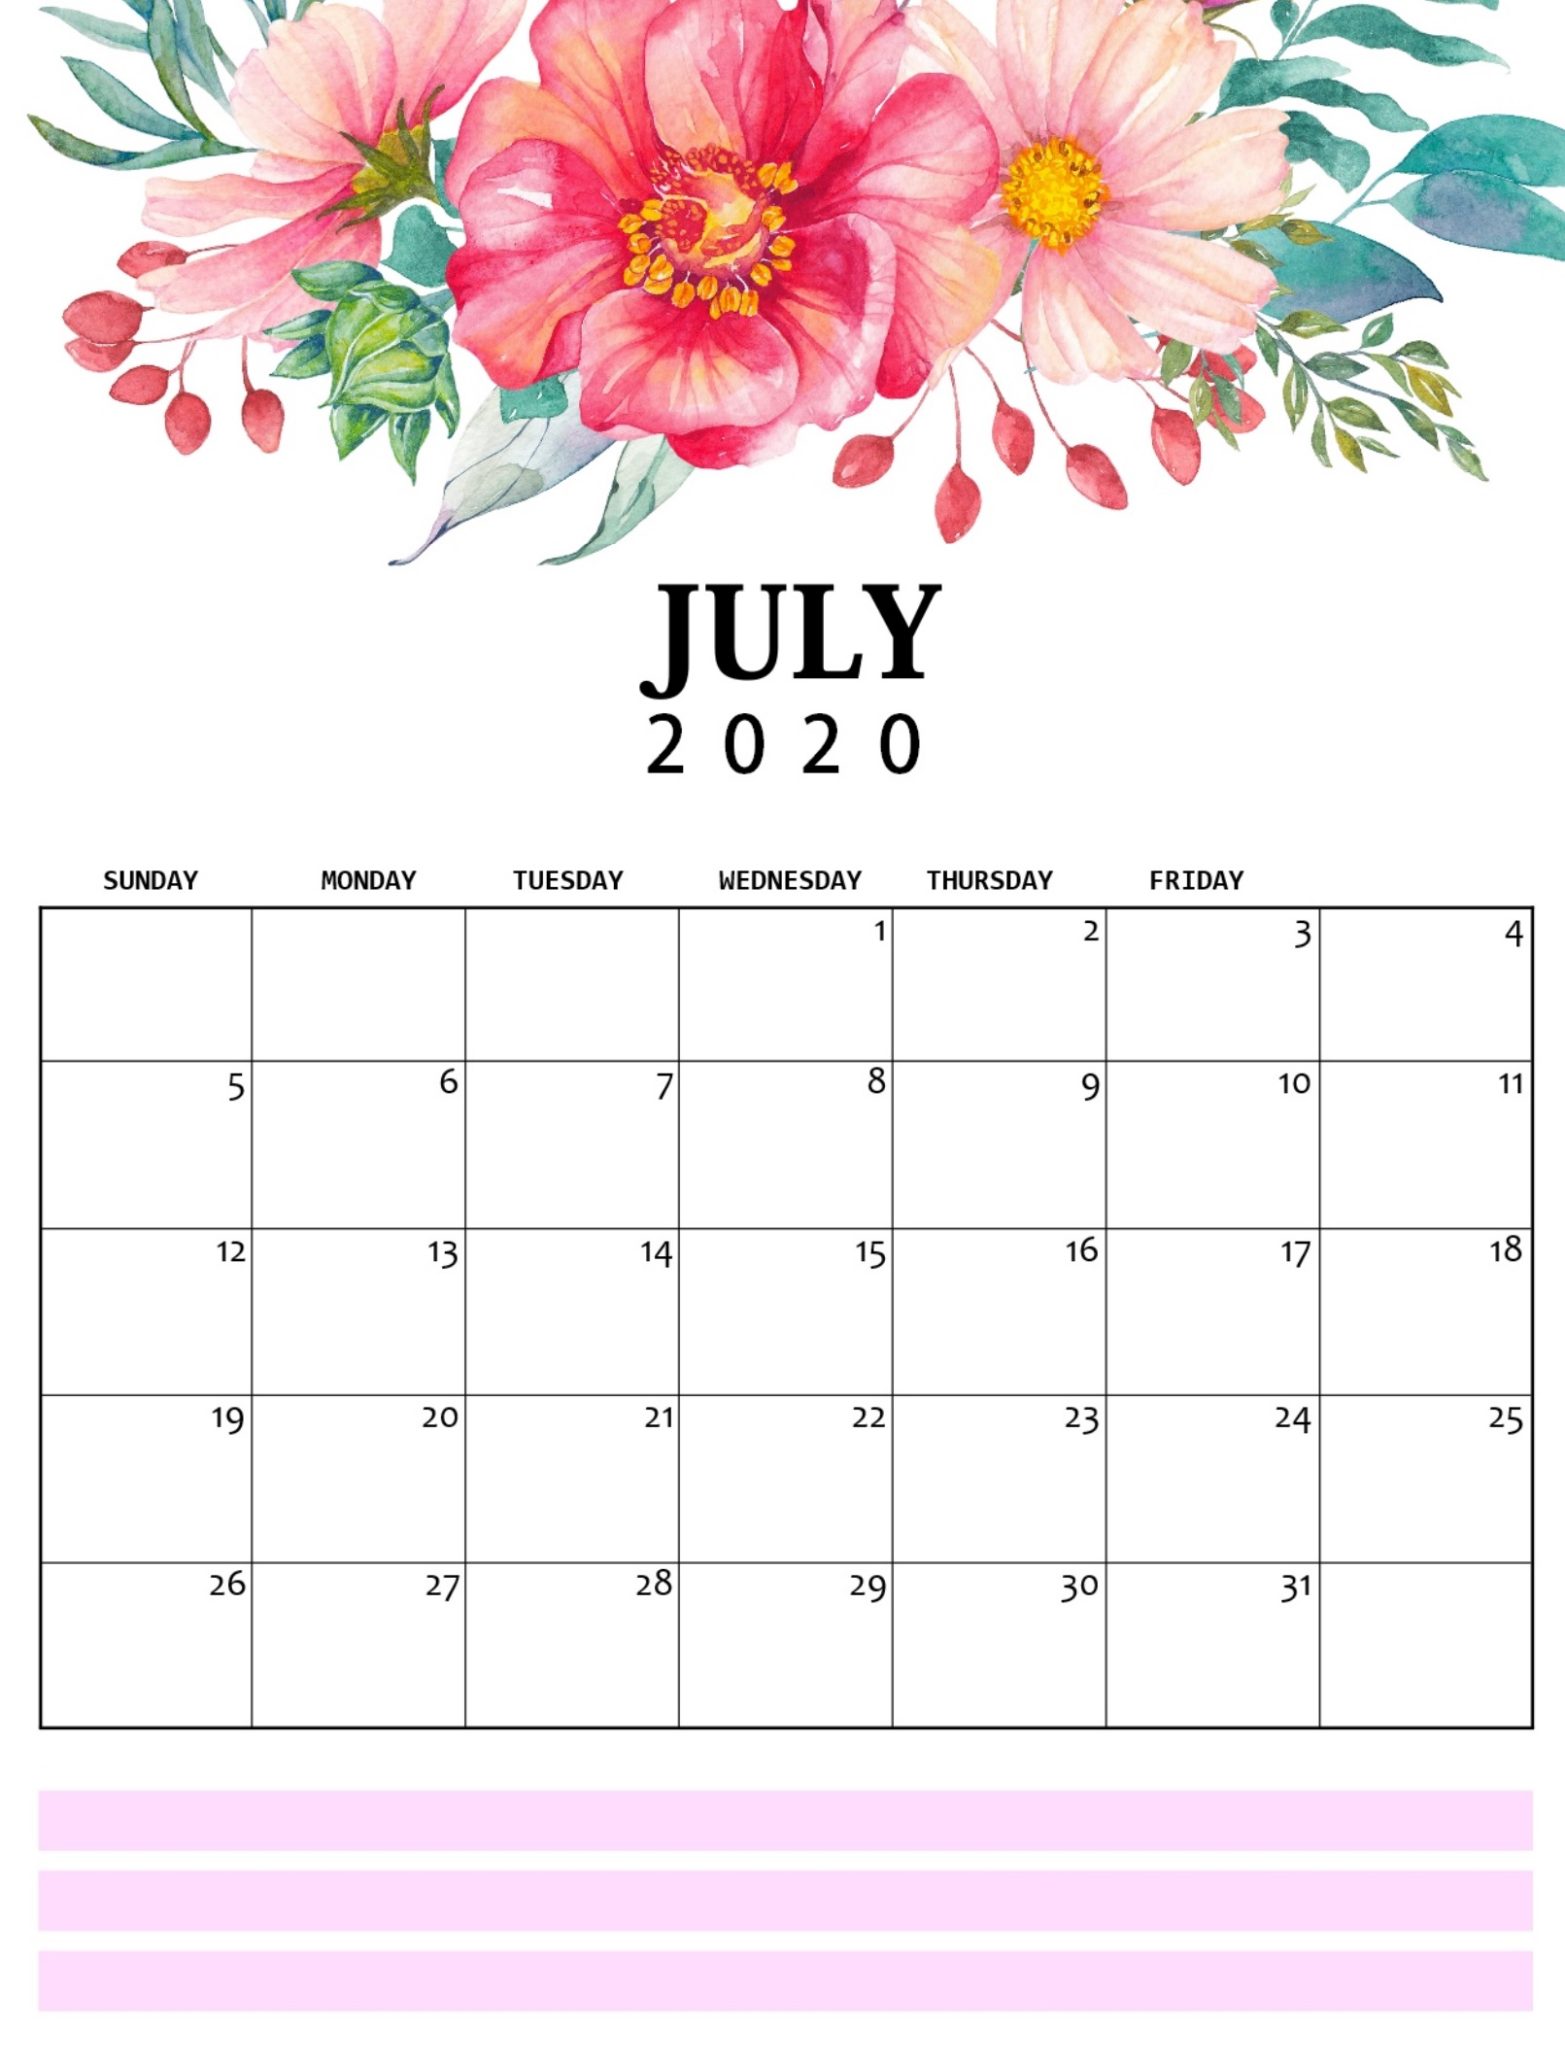 Календарь на июль месяц. Красивый календарь. Календарь июль. Календарик июль. Красивый календарь июль.